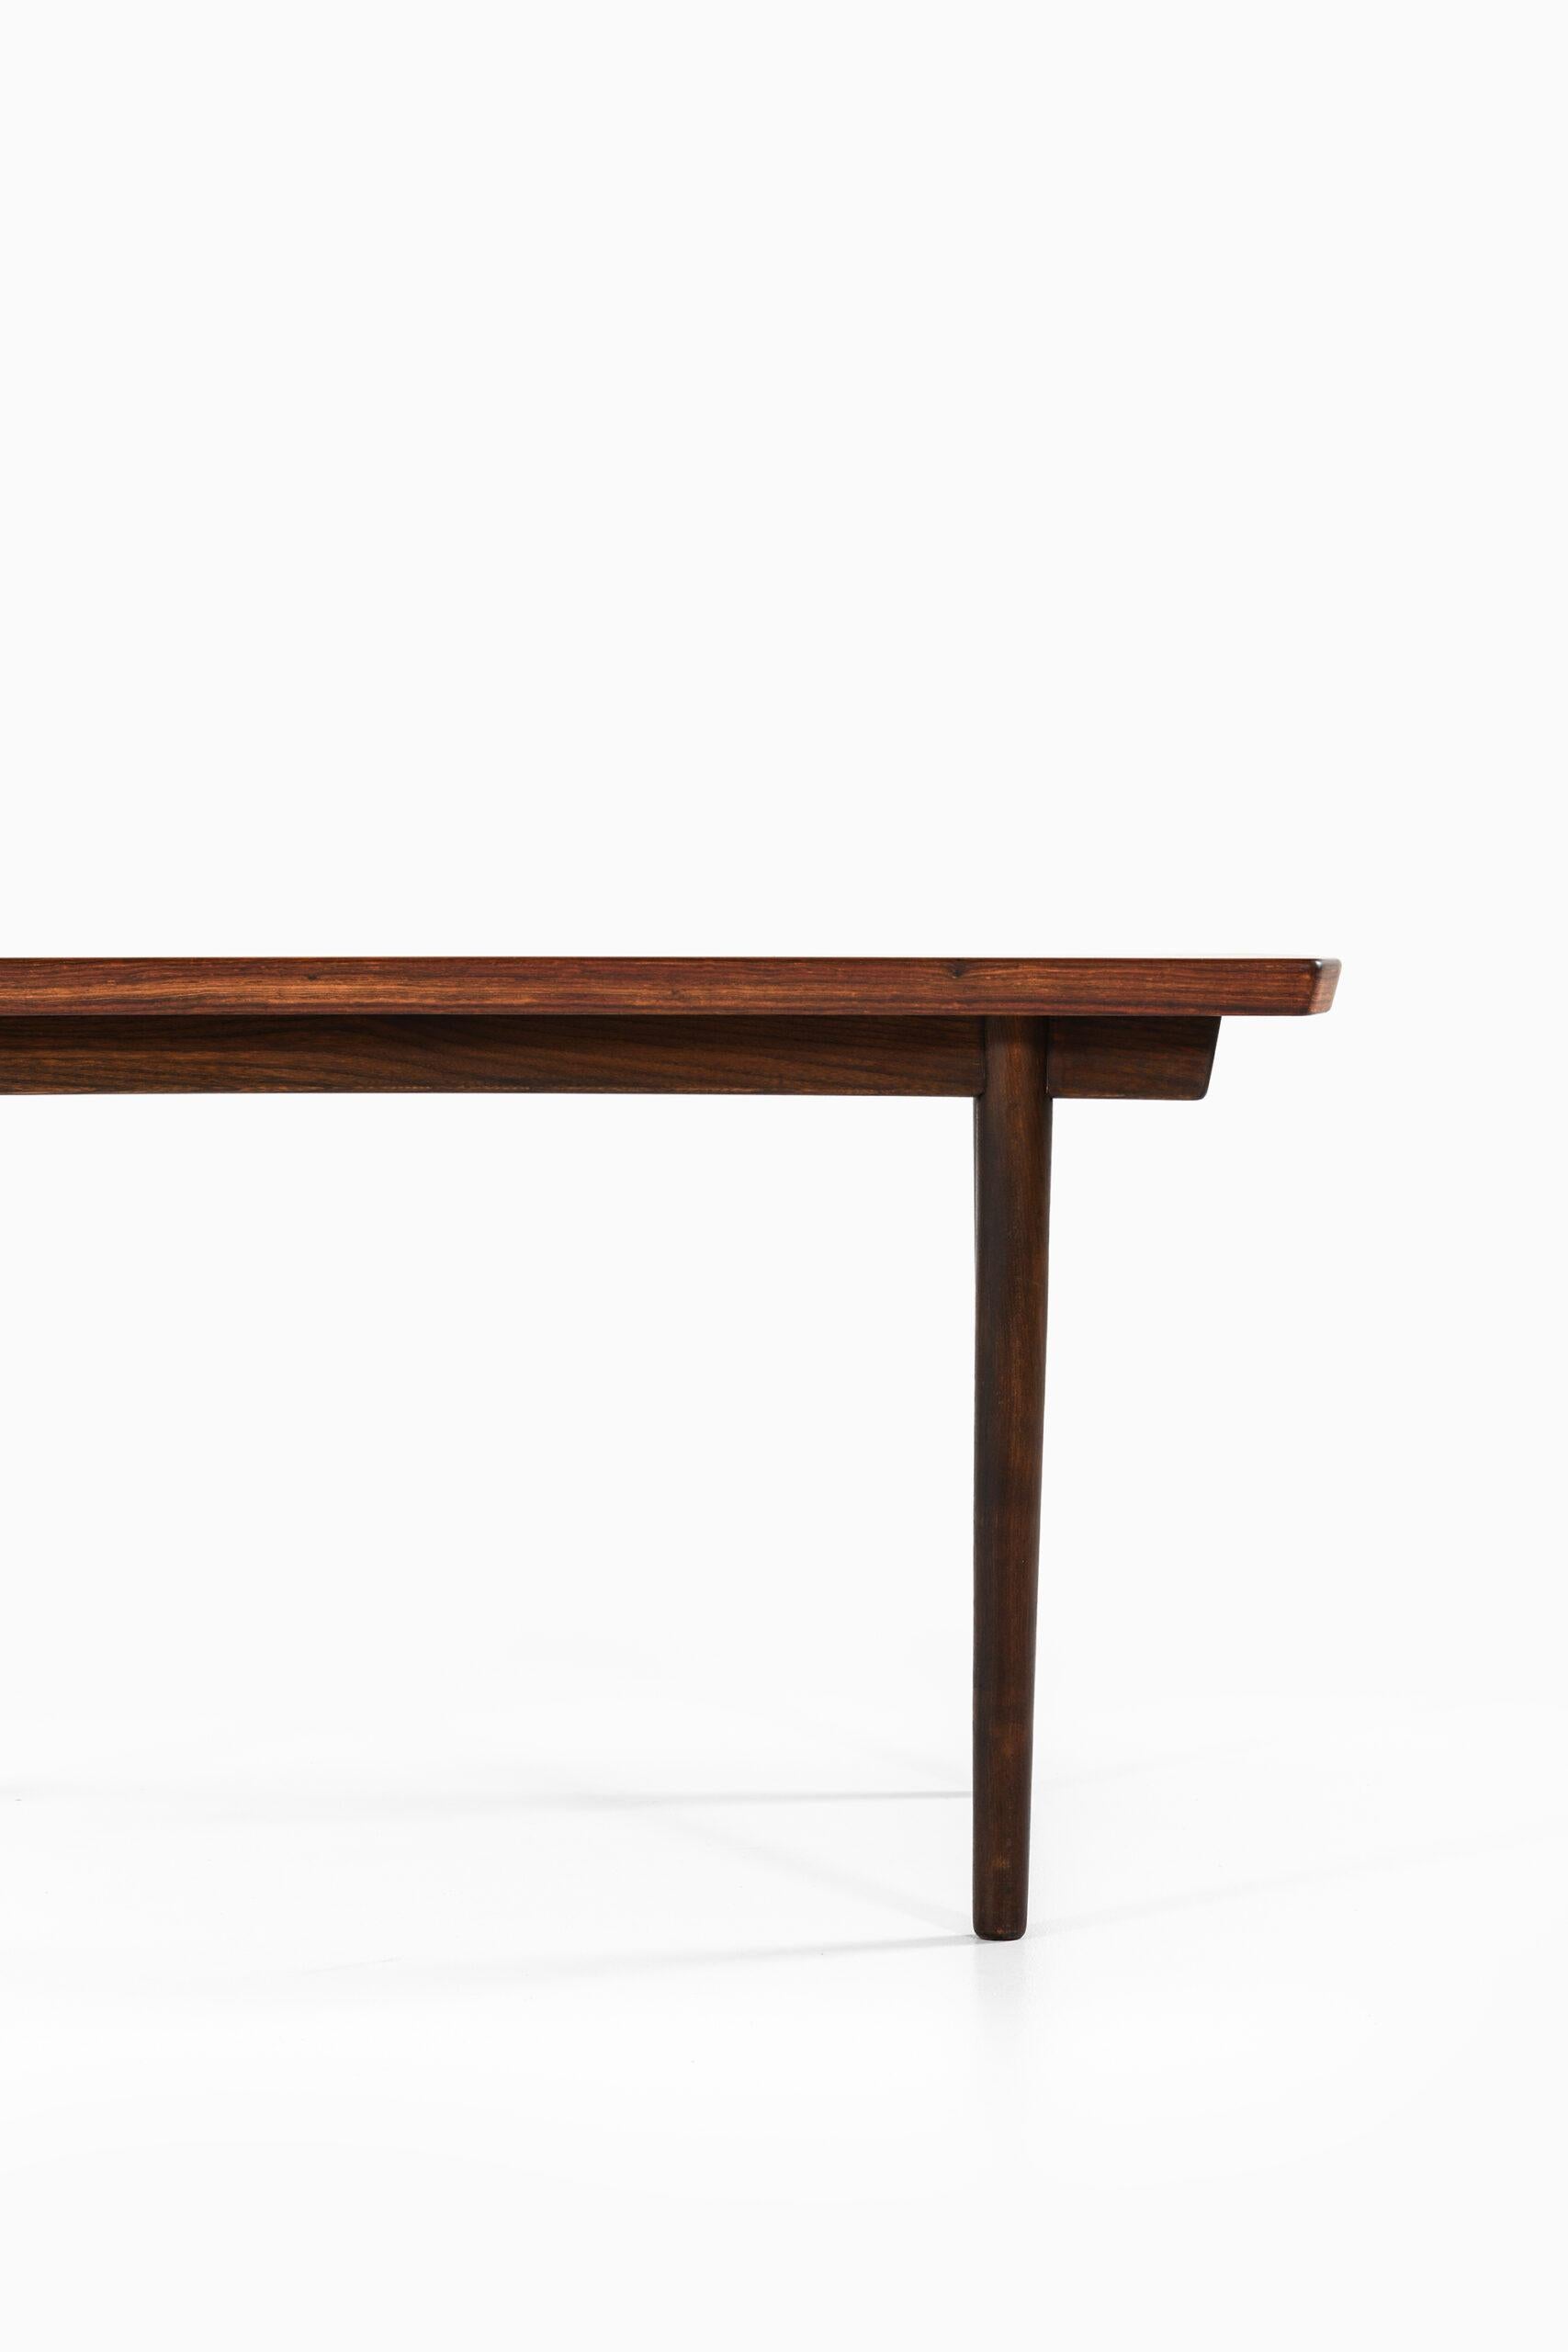 Rare dining table designed by Finn Juhl. Produced by Søren Willadsen Møbelfabrik in Denmark.